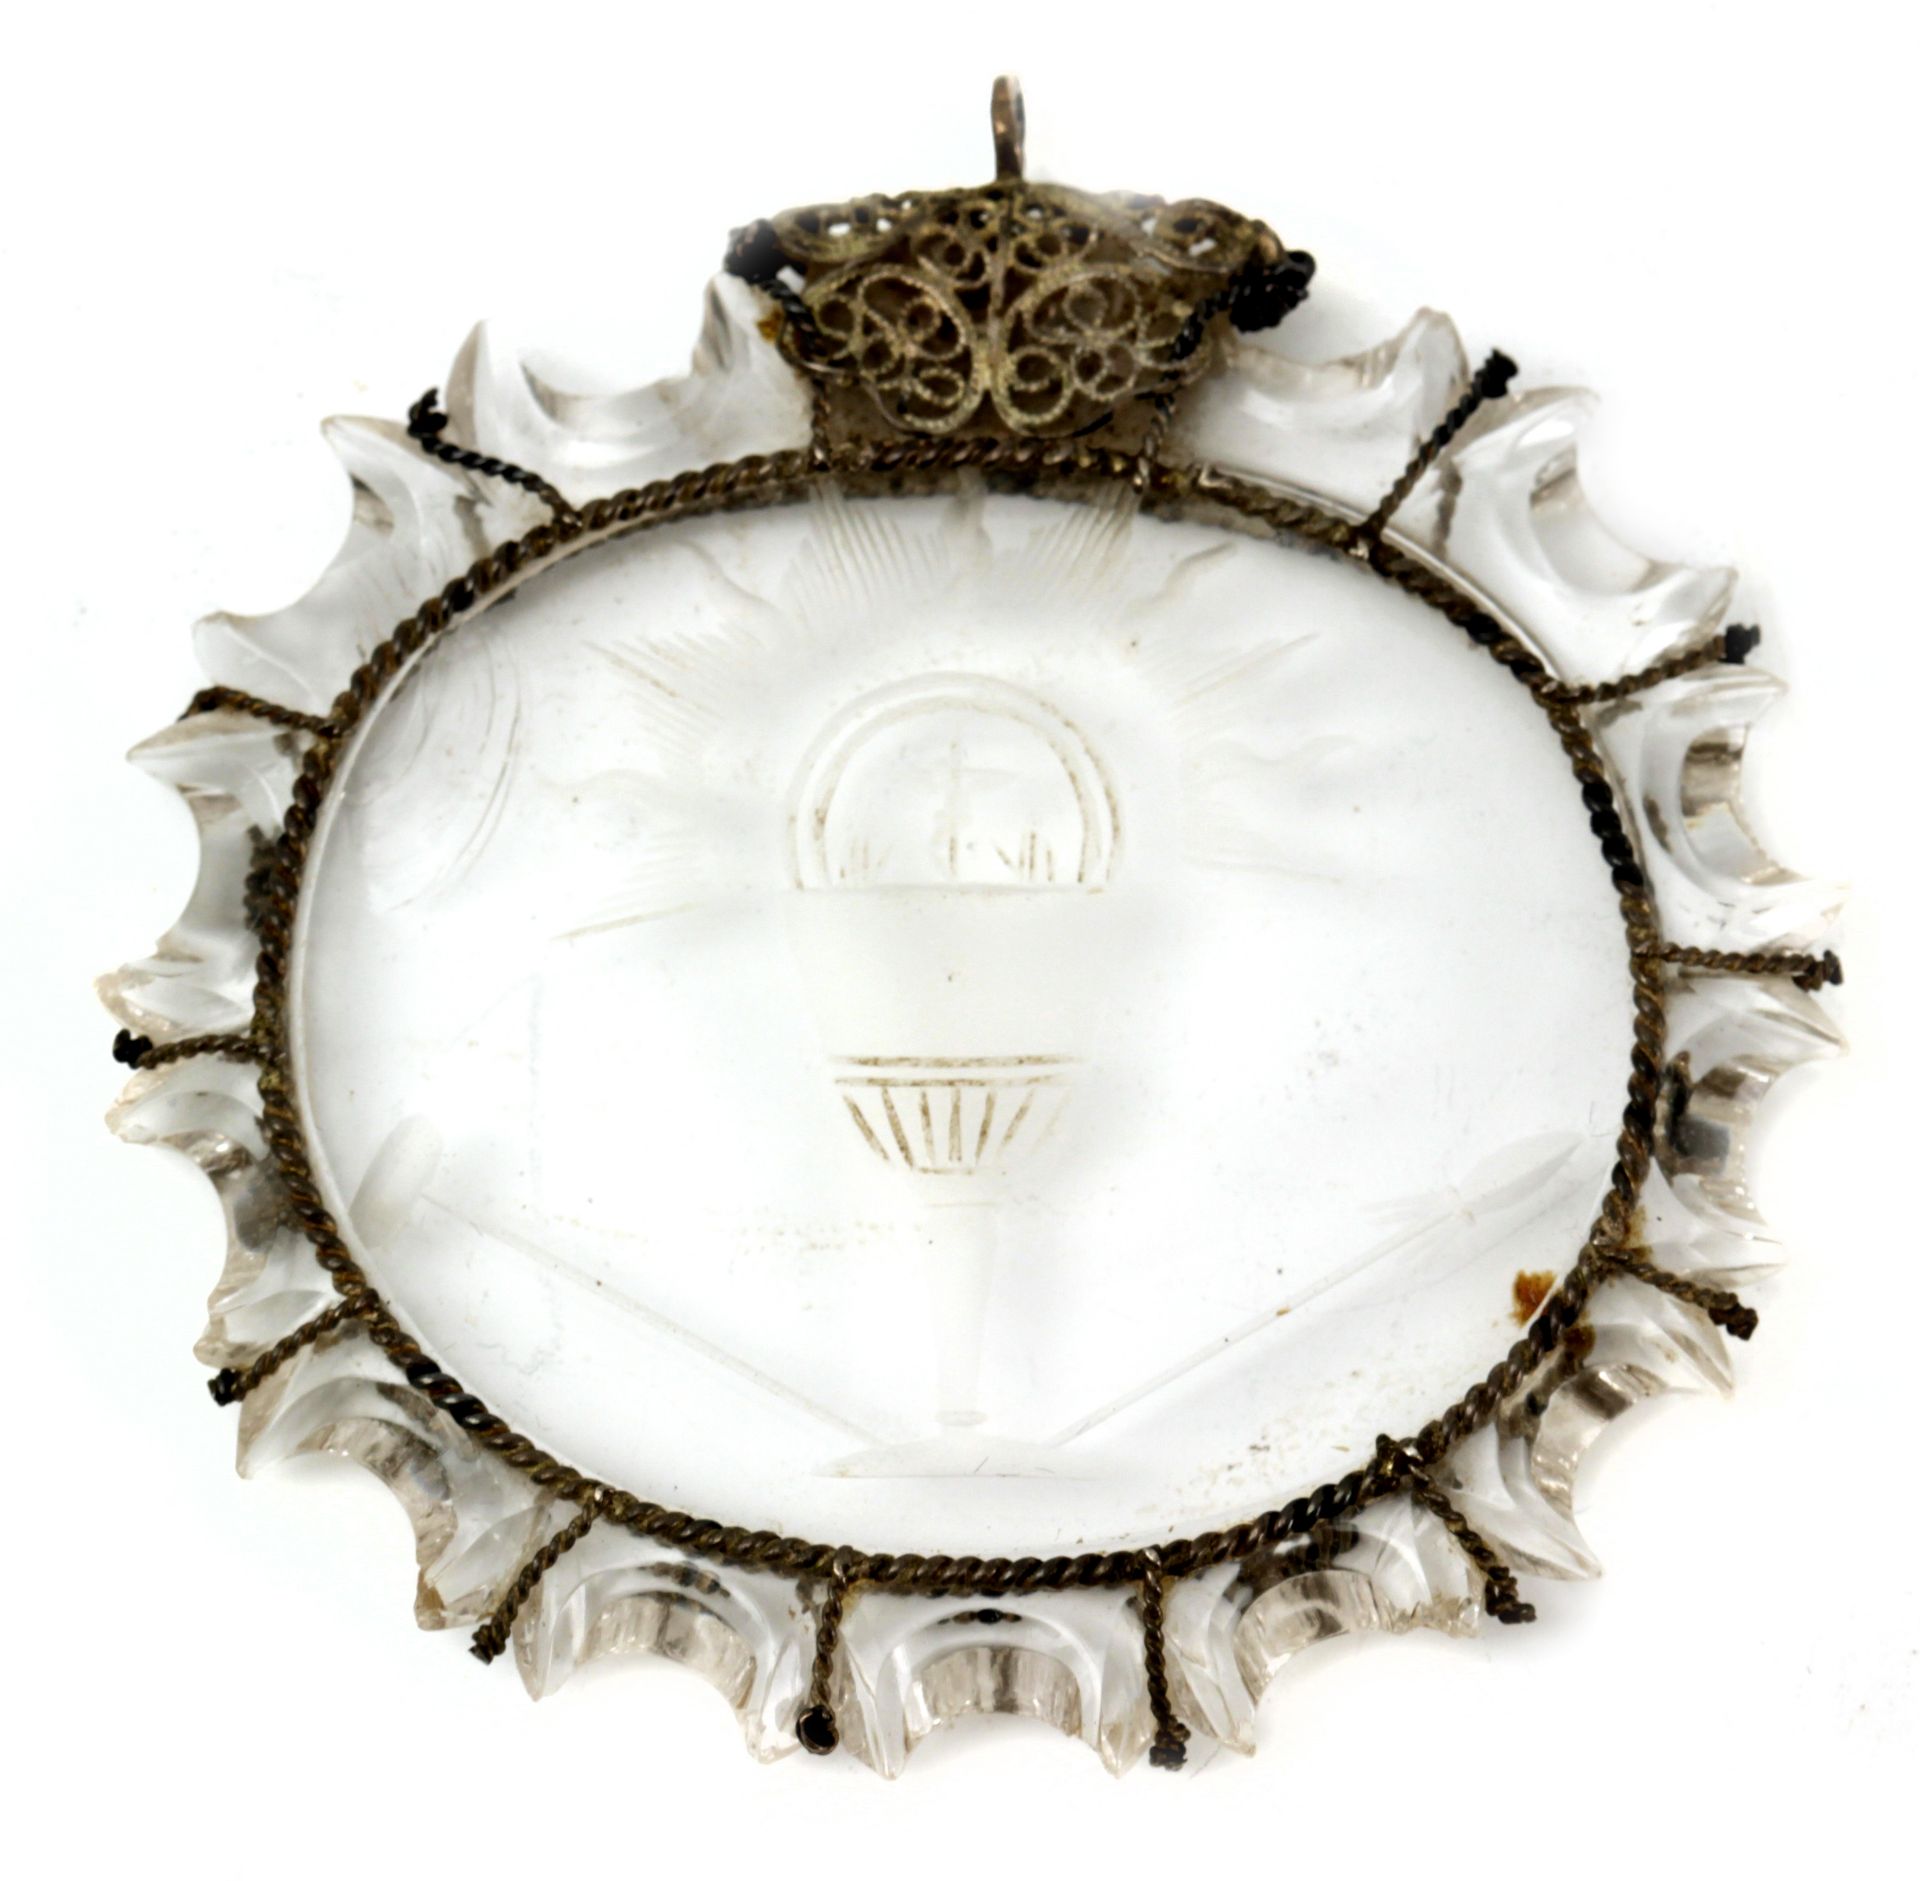 A 17th century Spanish silver reliquary pendant